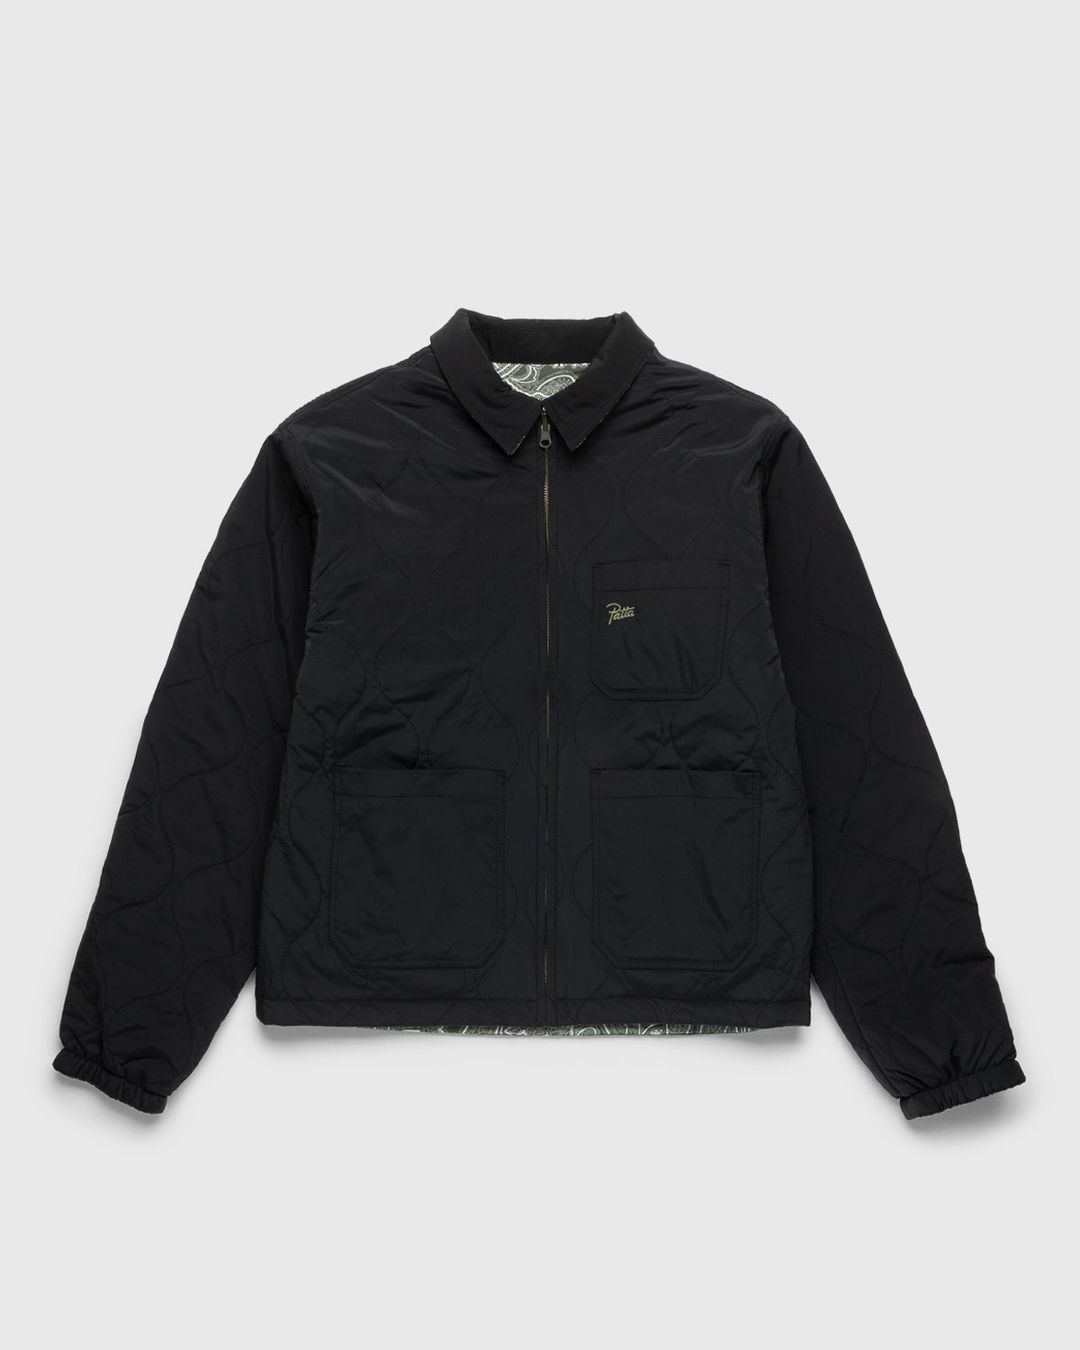 Patta – Paisley Reversible Jacket Black Paisley | Highsnobiety Shop